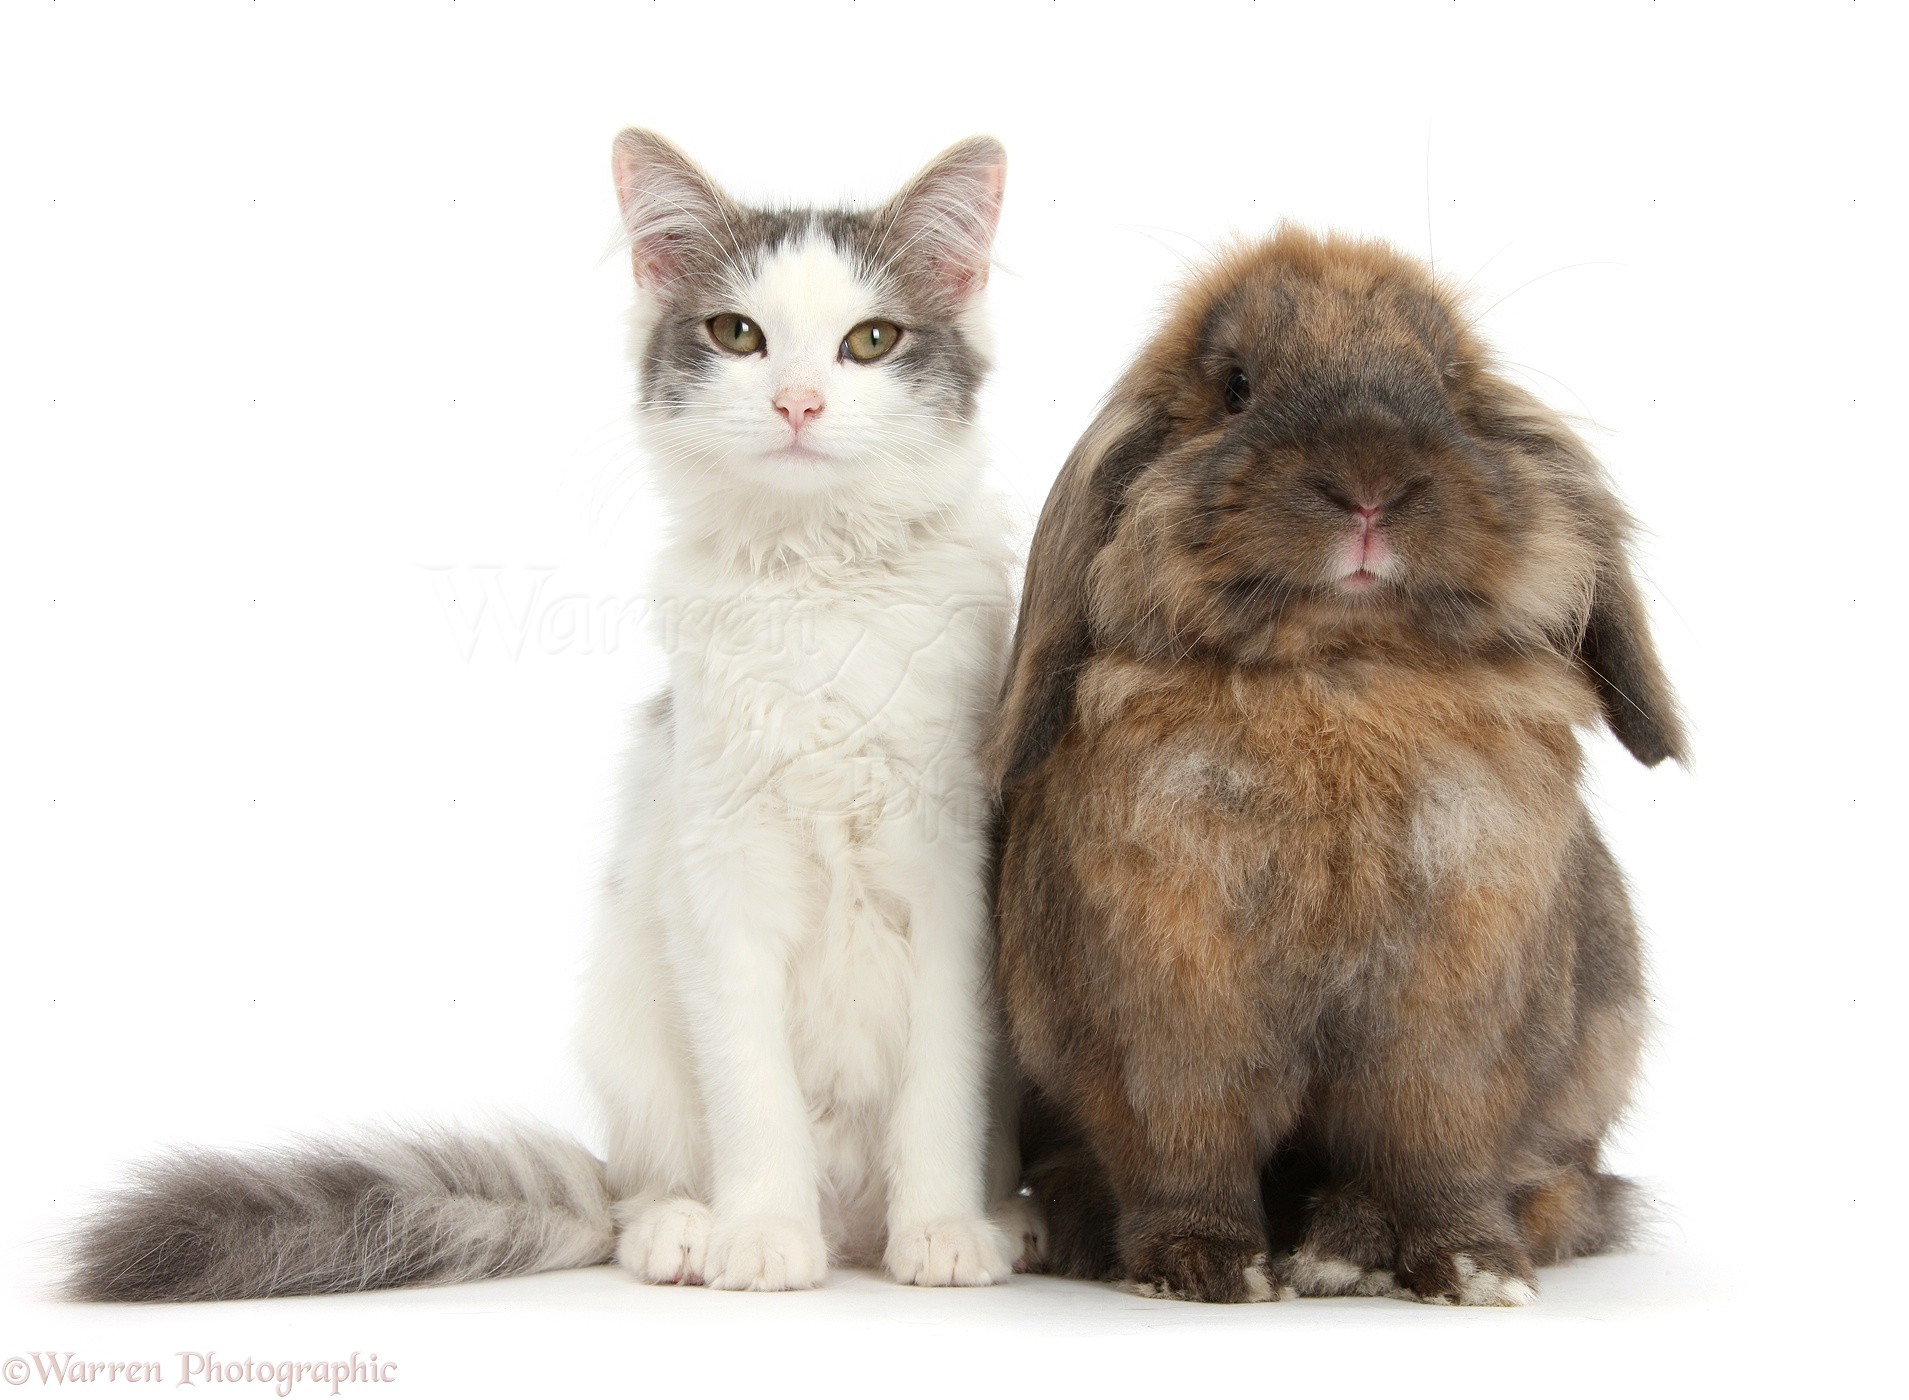 Pets Silverandwhite female cat and Lionheadcross rabbit photo WP47513